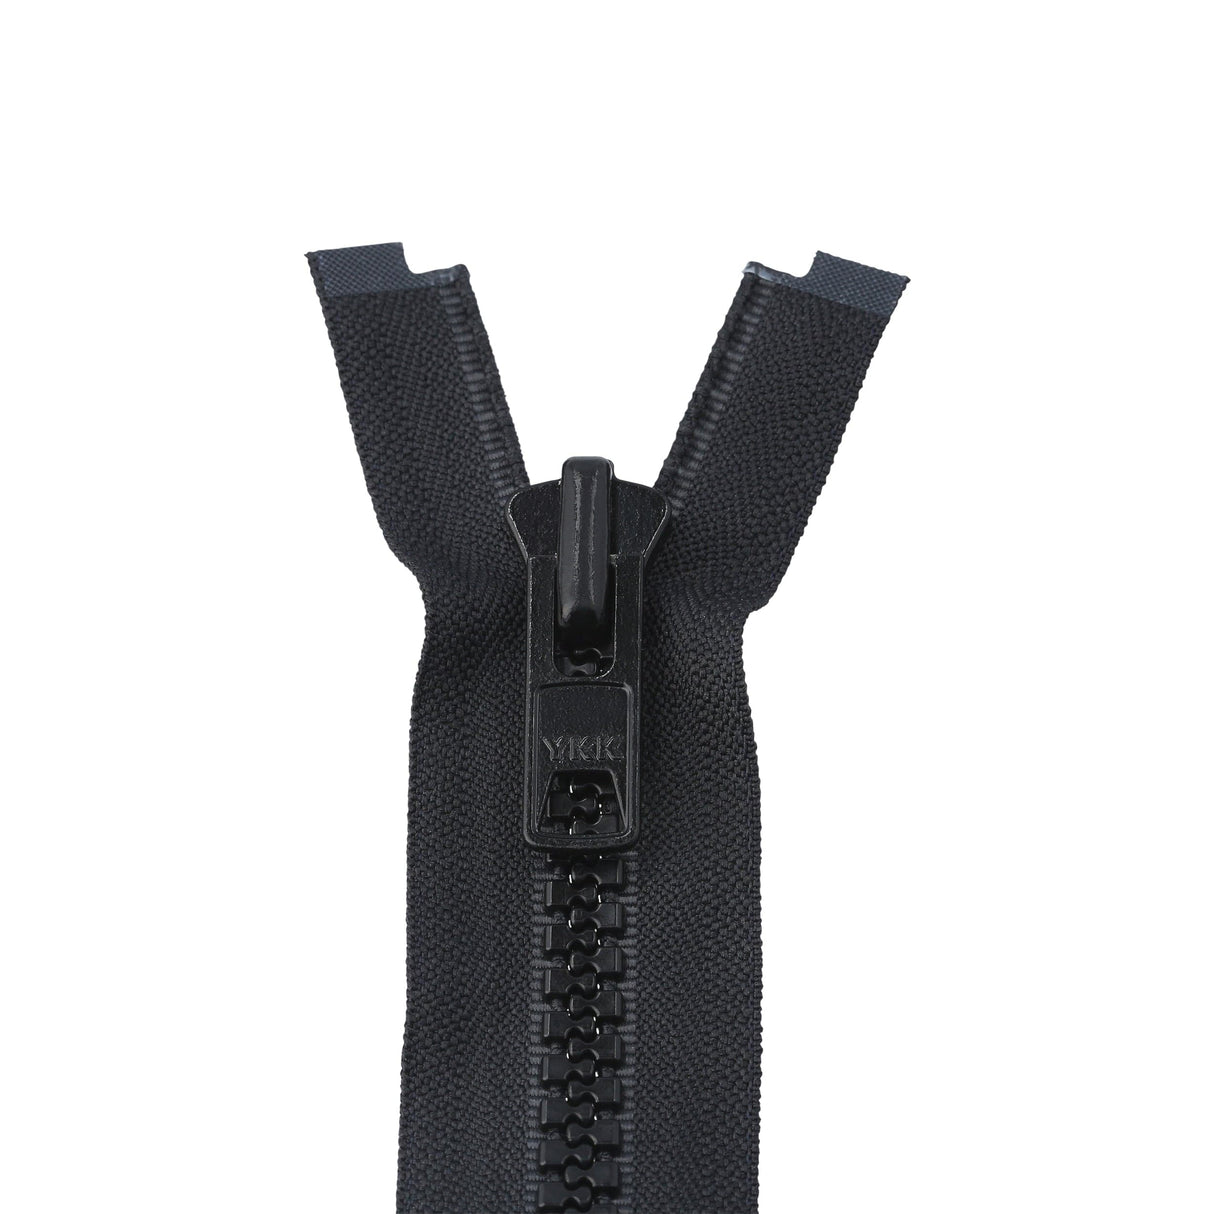 Ohio Travel Bag Zippers #10 Vislon Jacket Zipper 24in Black, #10VF-24-BLK 10VF-24-BLK